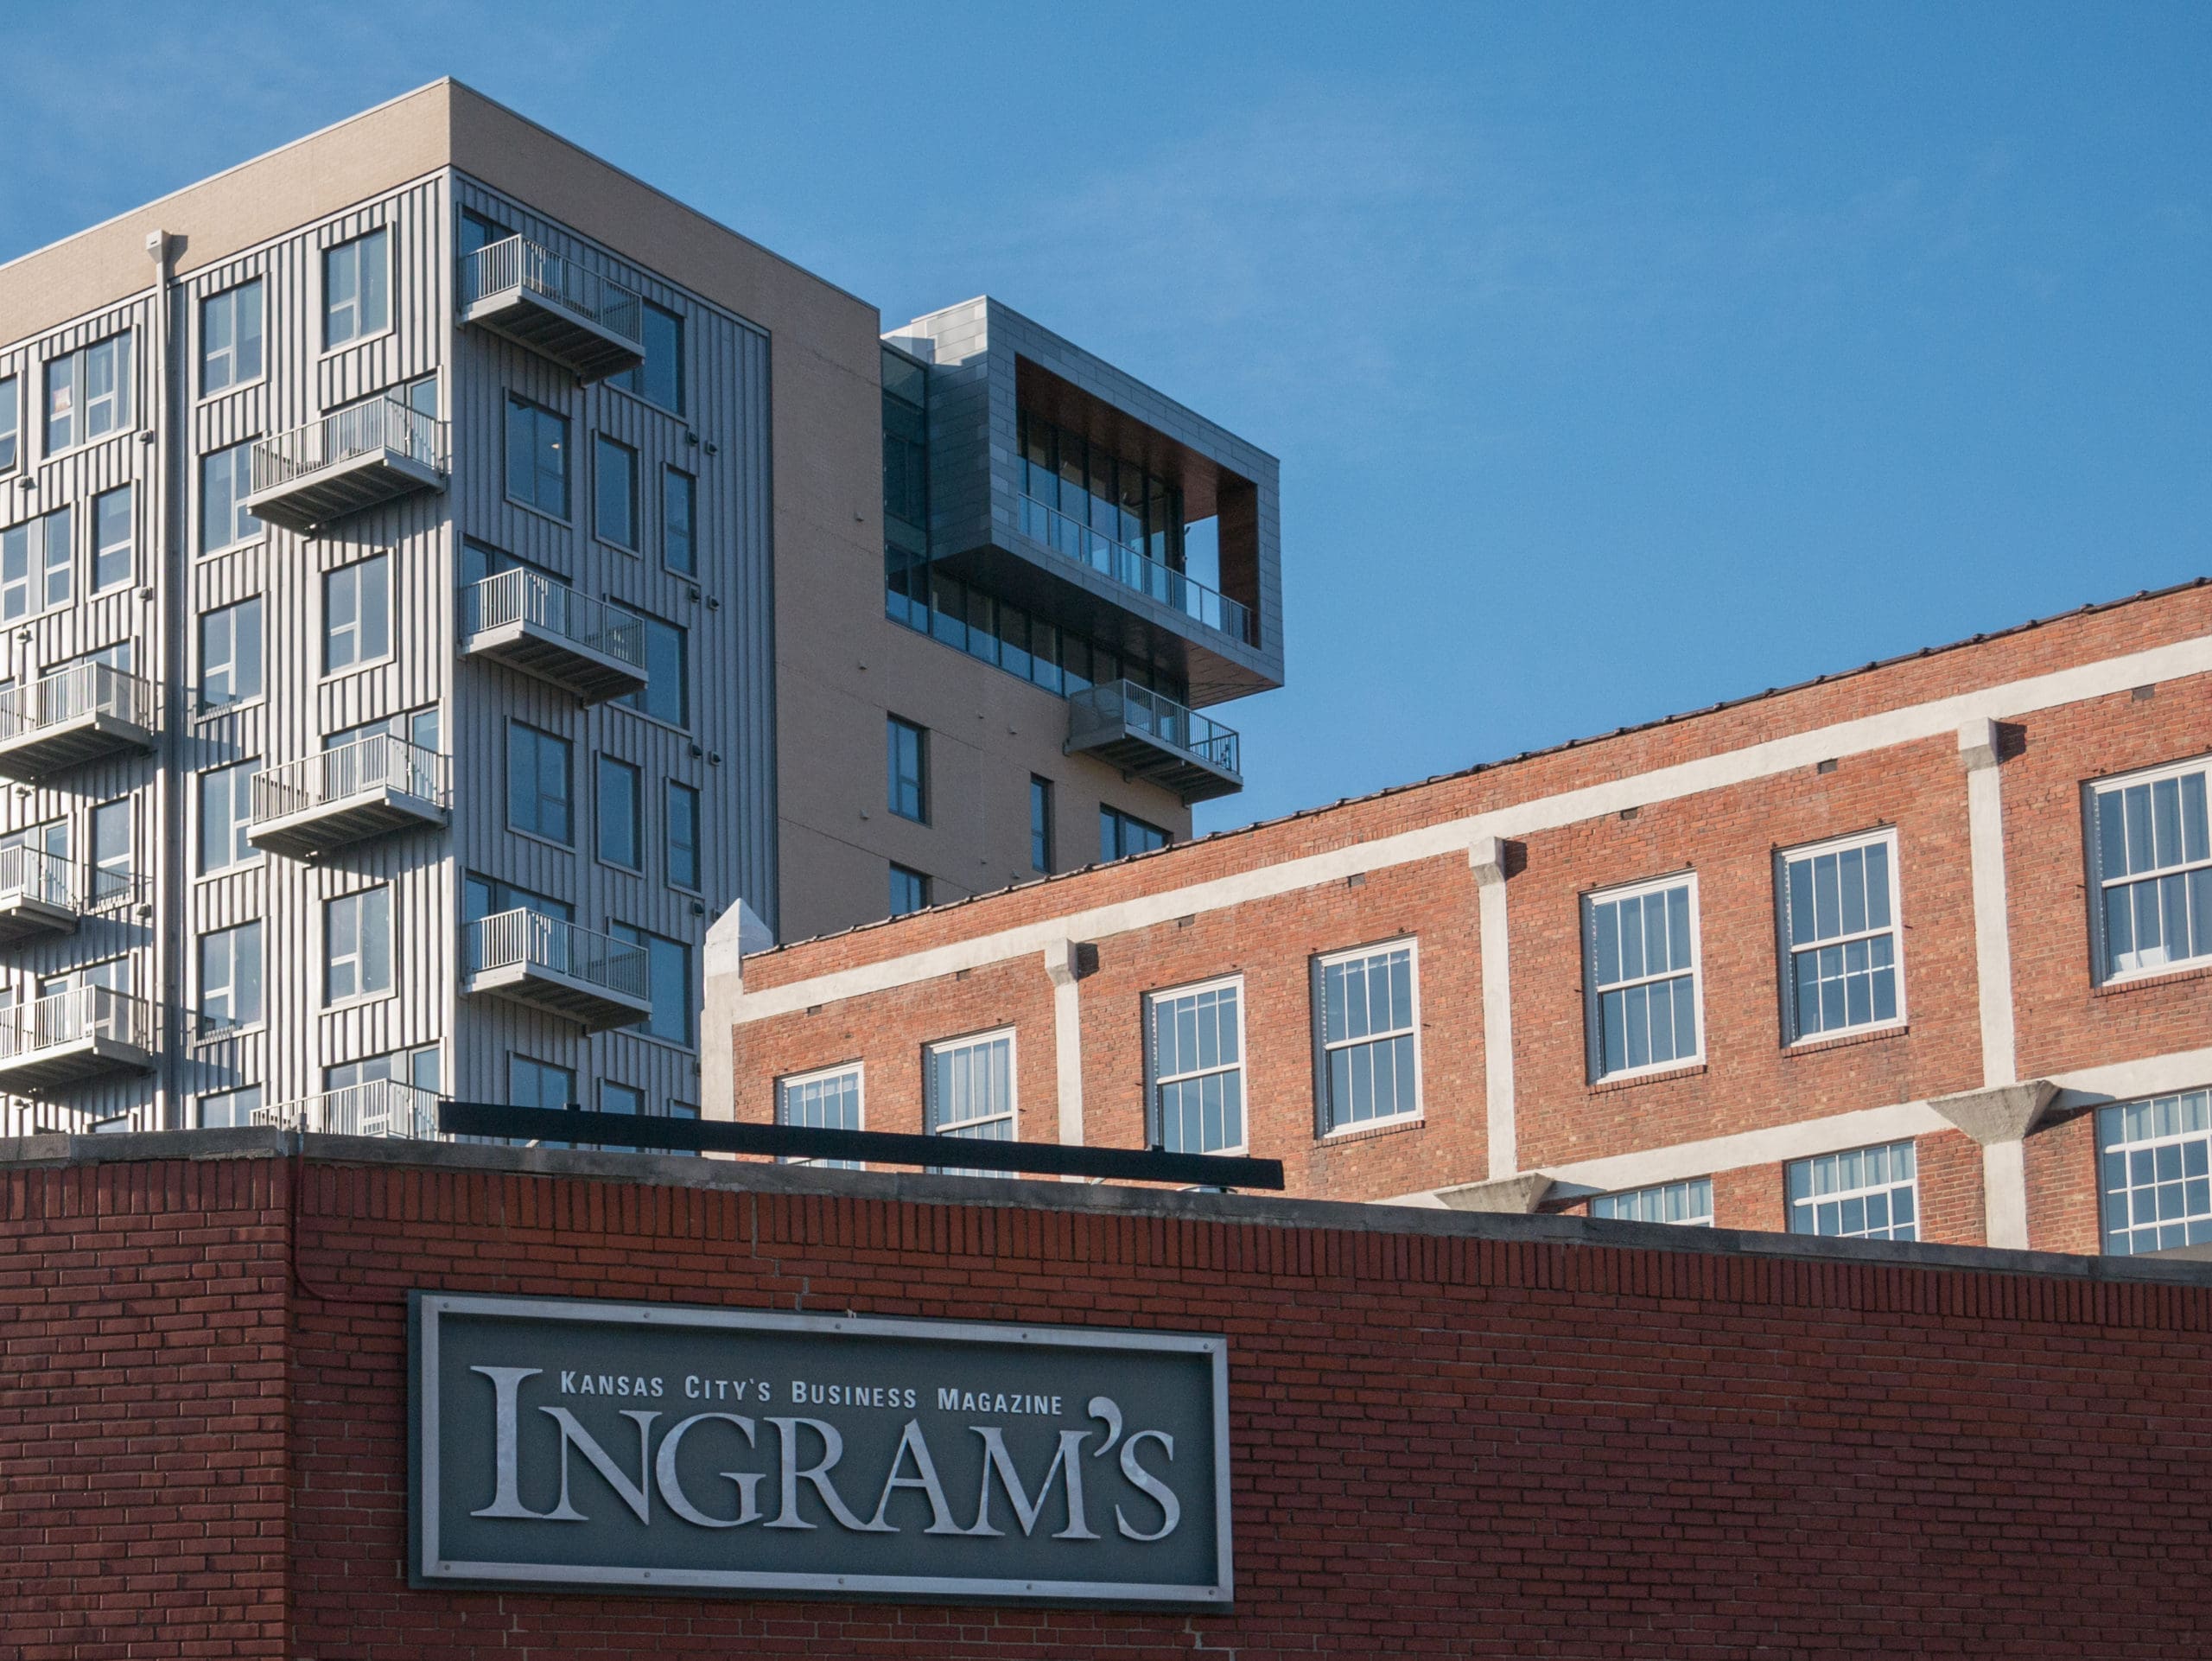 the building of Ingram's: Kansas City's Business Magazine.